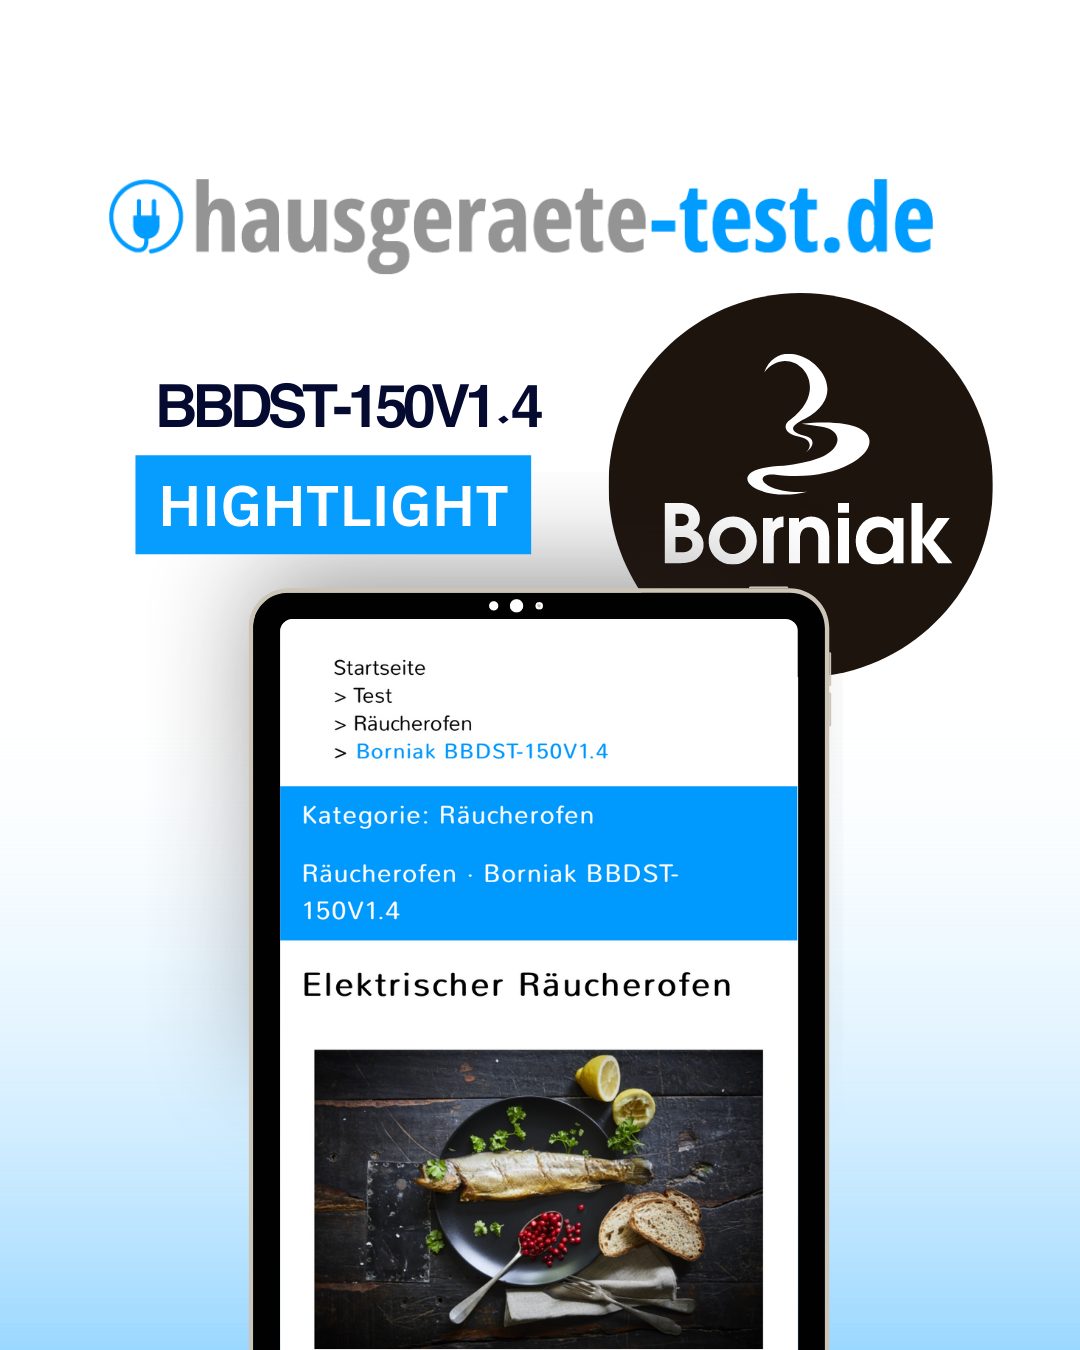 Hausgeraete-test.de Award We are glad to announce that our #Borniak